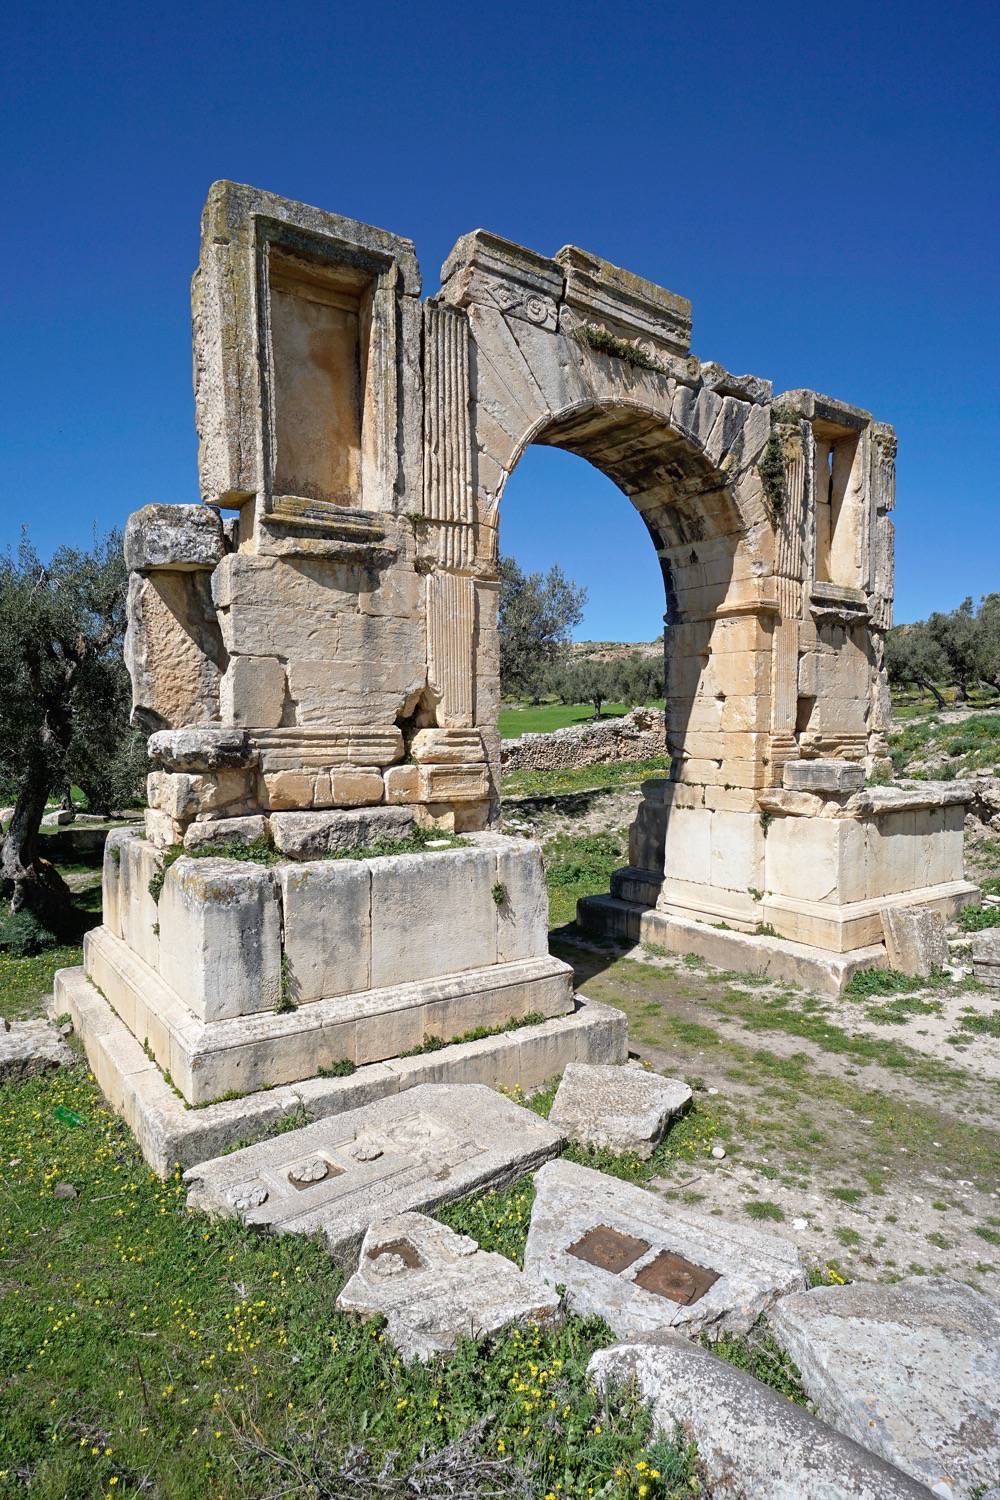 Alexander Severe's Arch